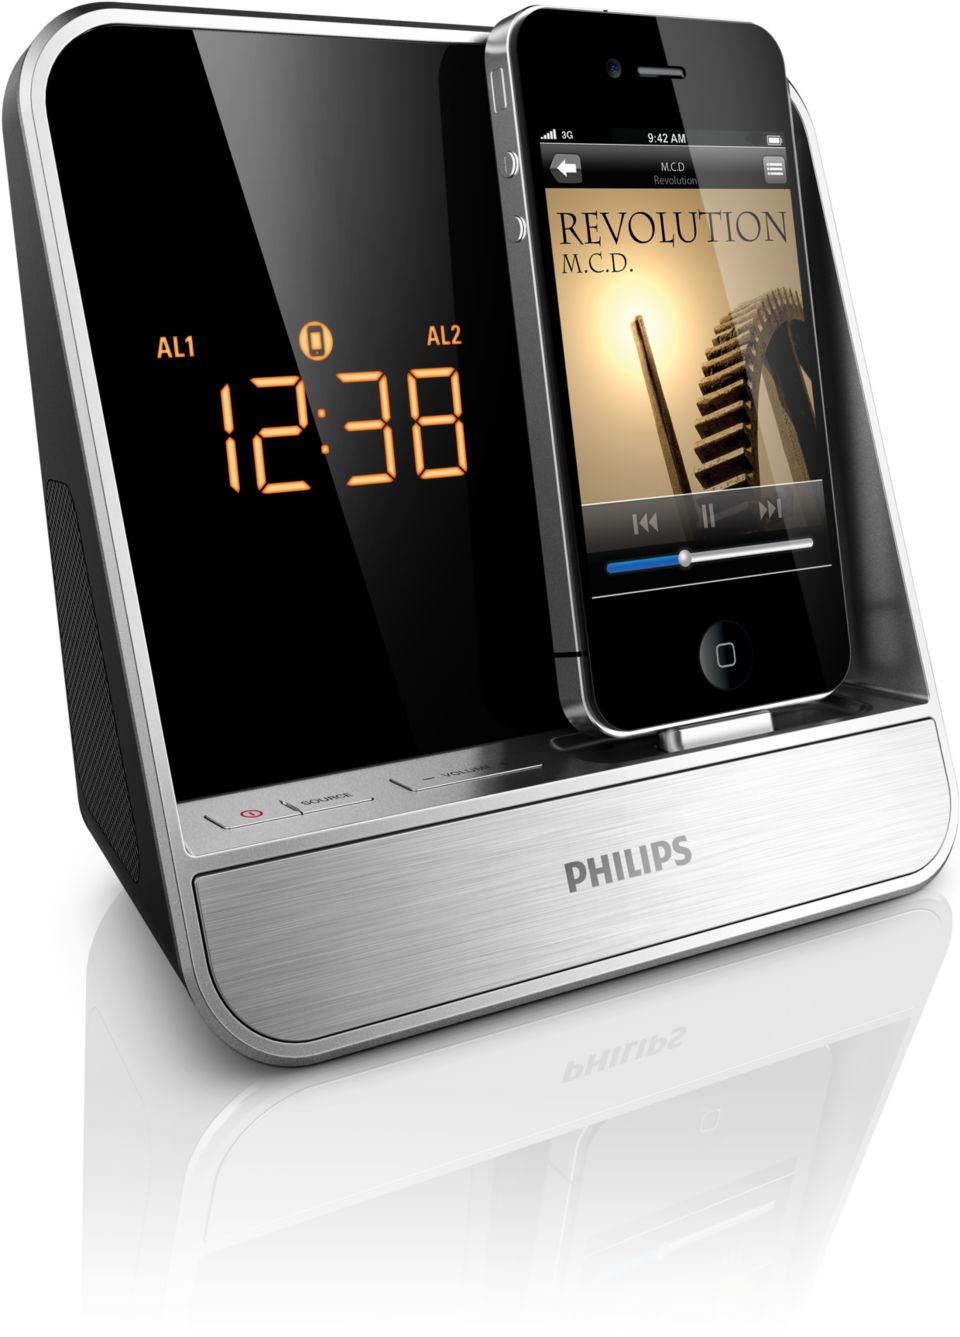 Radio Radio Despertador Philips Aj3270d Docking Iphone